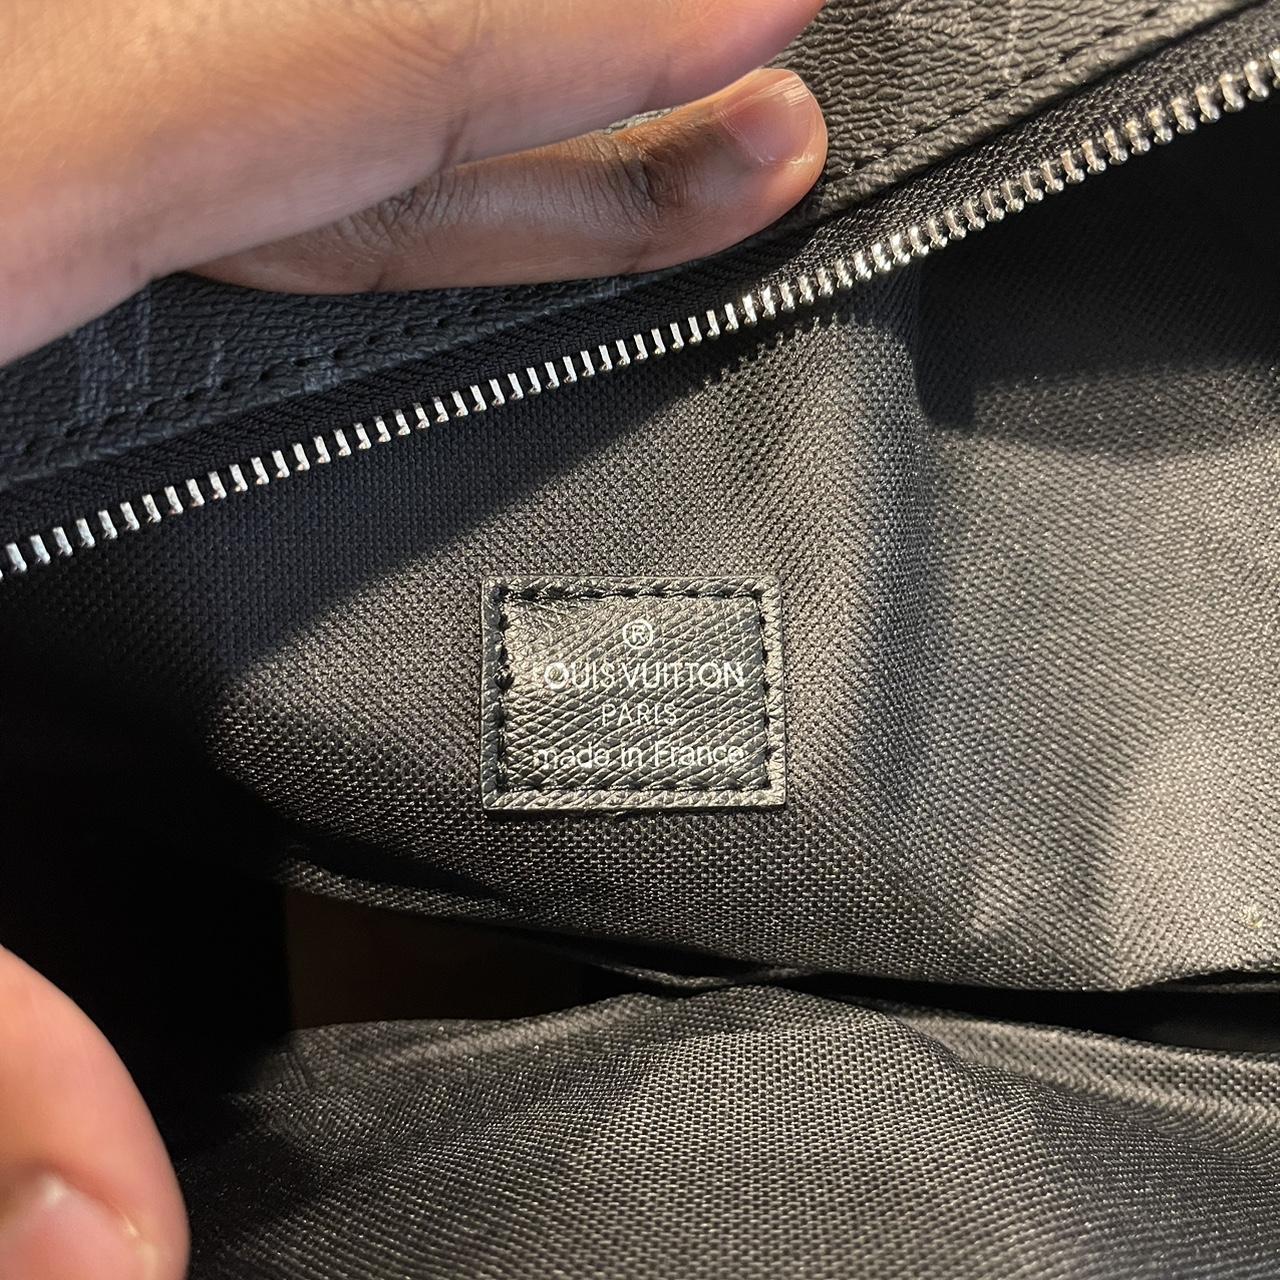 Louis Vuitton bag pack Black and grey Set - £100 - Depop